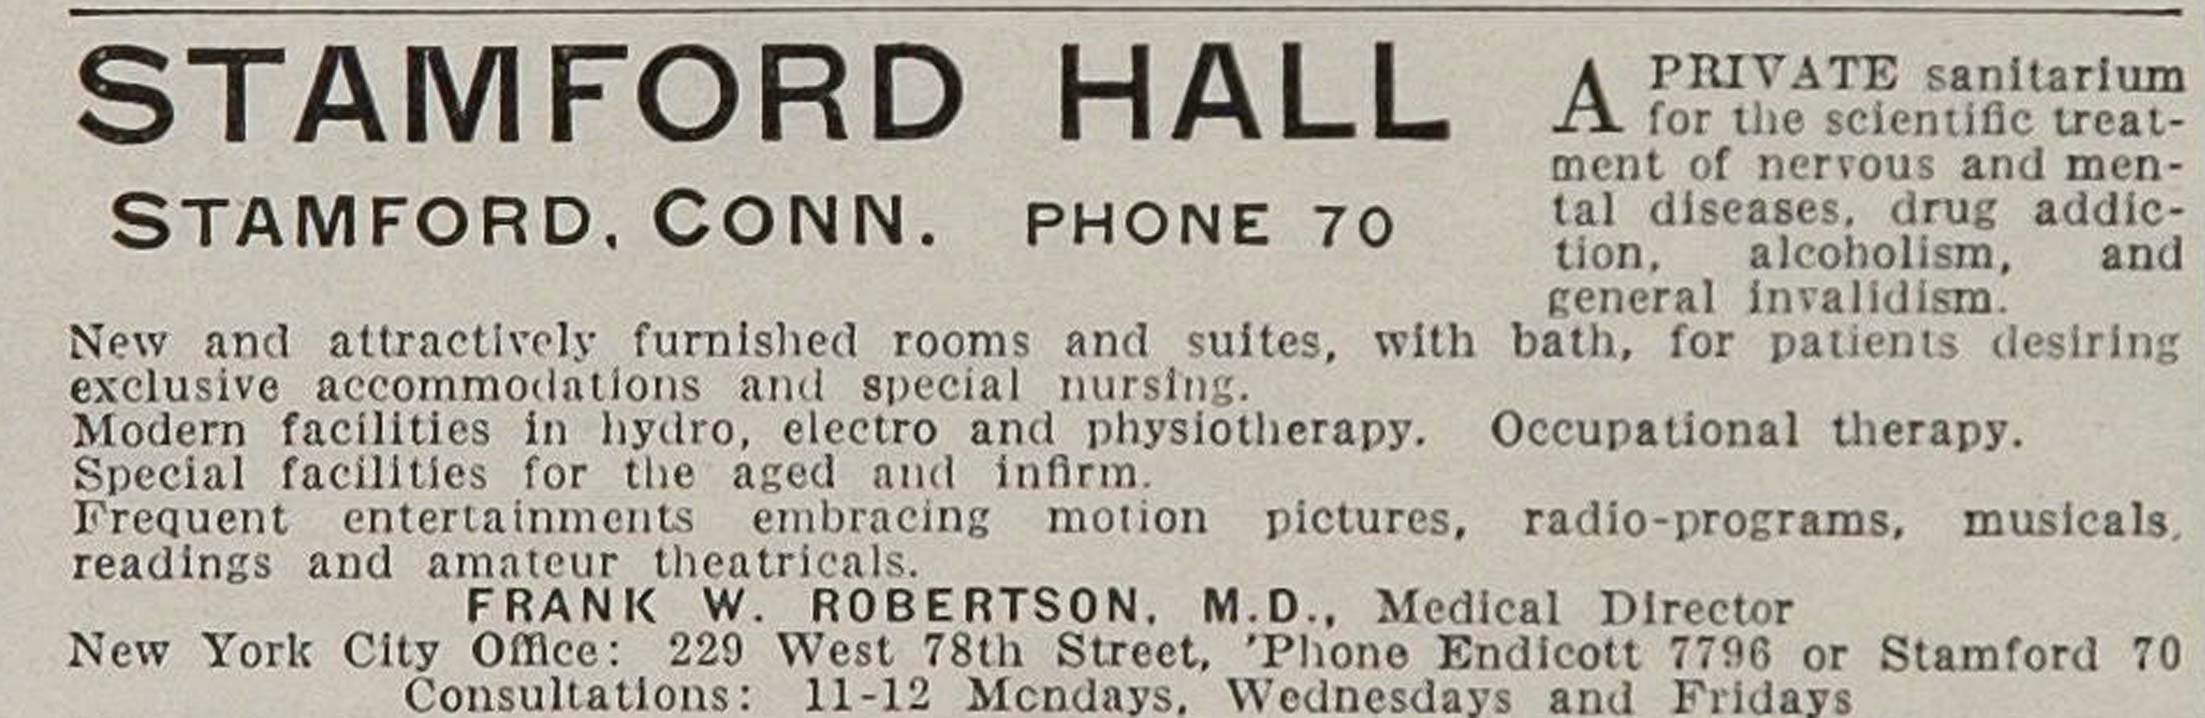 1926 Ad Stamford Hall Sanitarium CT Frank W. Robertson - ORIGINAL ADVERTISING